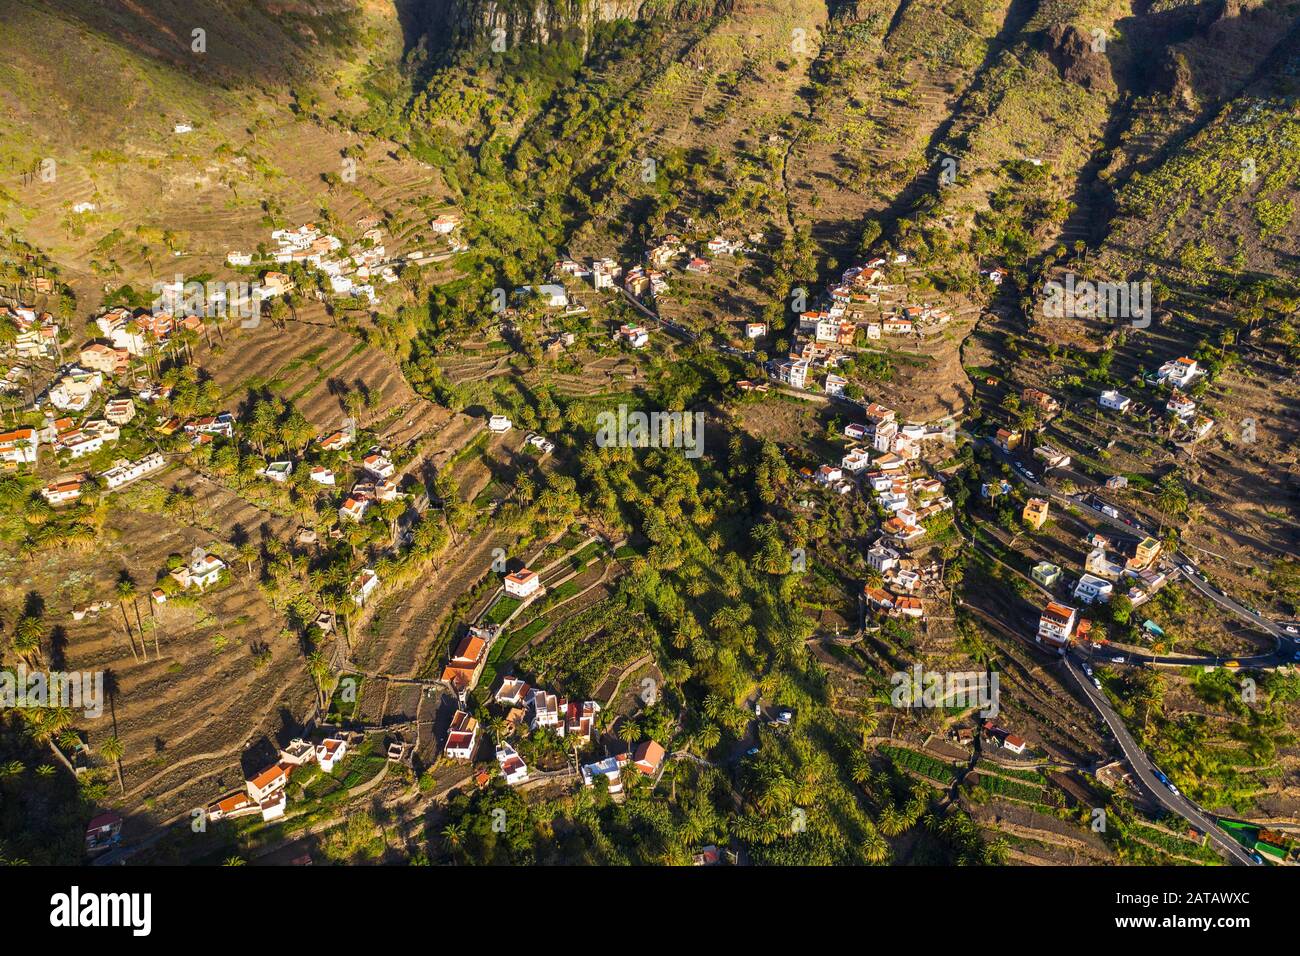 Lomo del Balo et Vizcaina, Valle Gran Rey, vue aérienne, la Gomera, îles Canaries, Espagne Banque D'Images